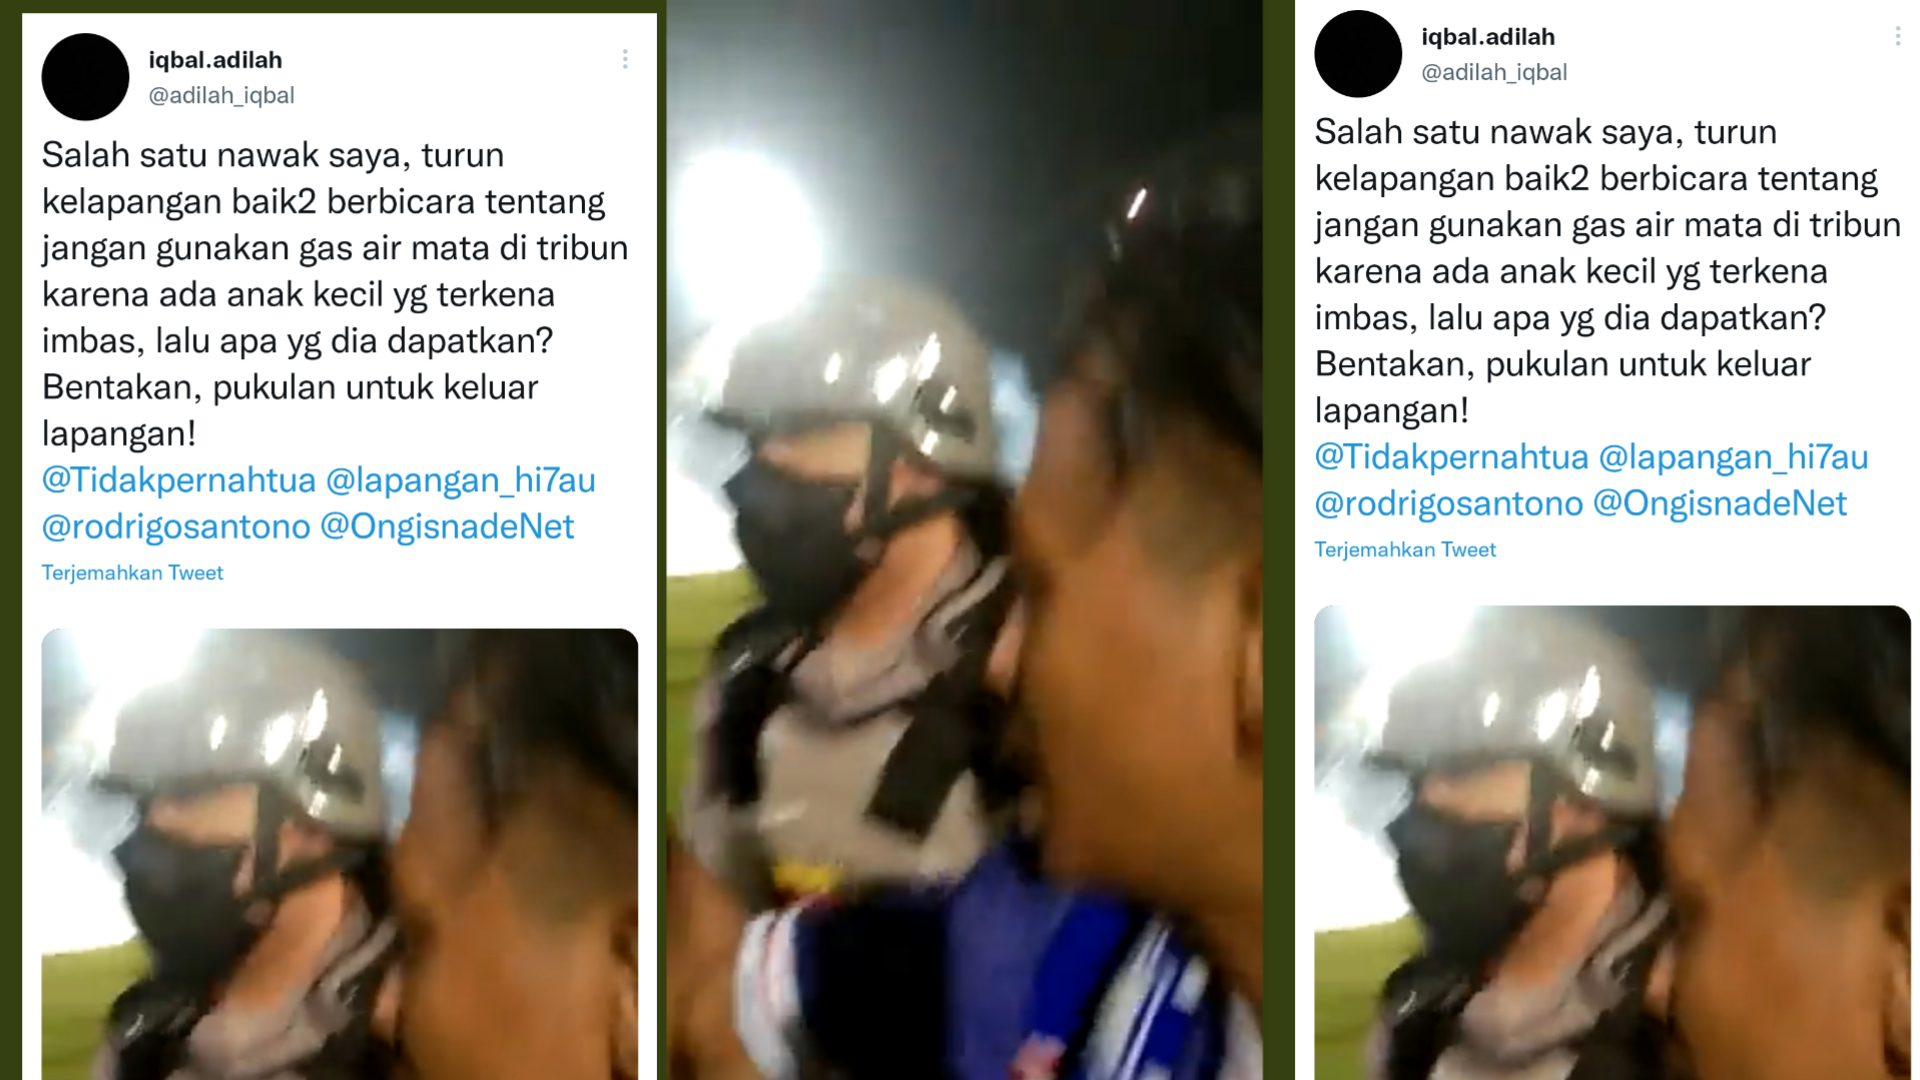 Viral! Perlakuan Kasar Polisi Ke Suporter yang Memohon Jangan Pakai Gas Air Mata